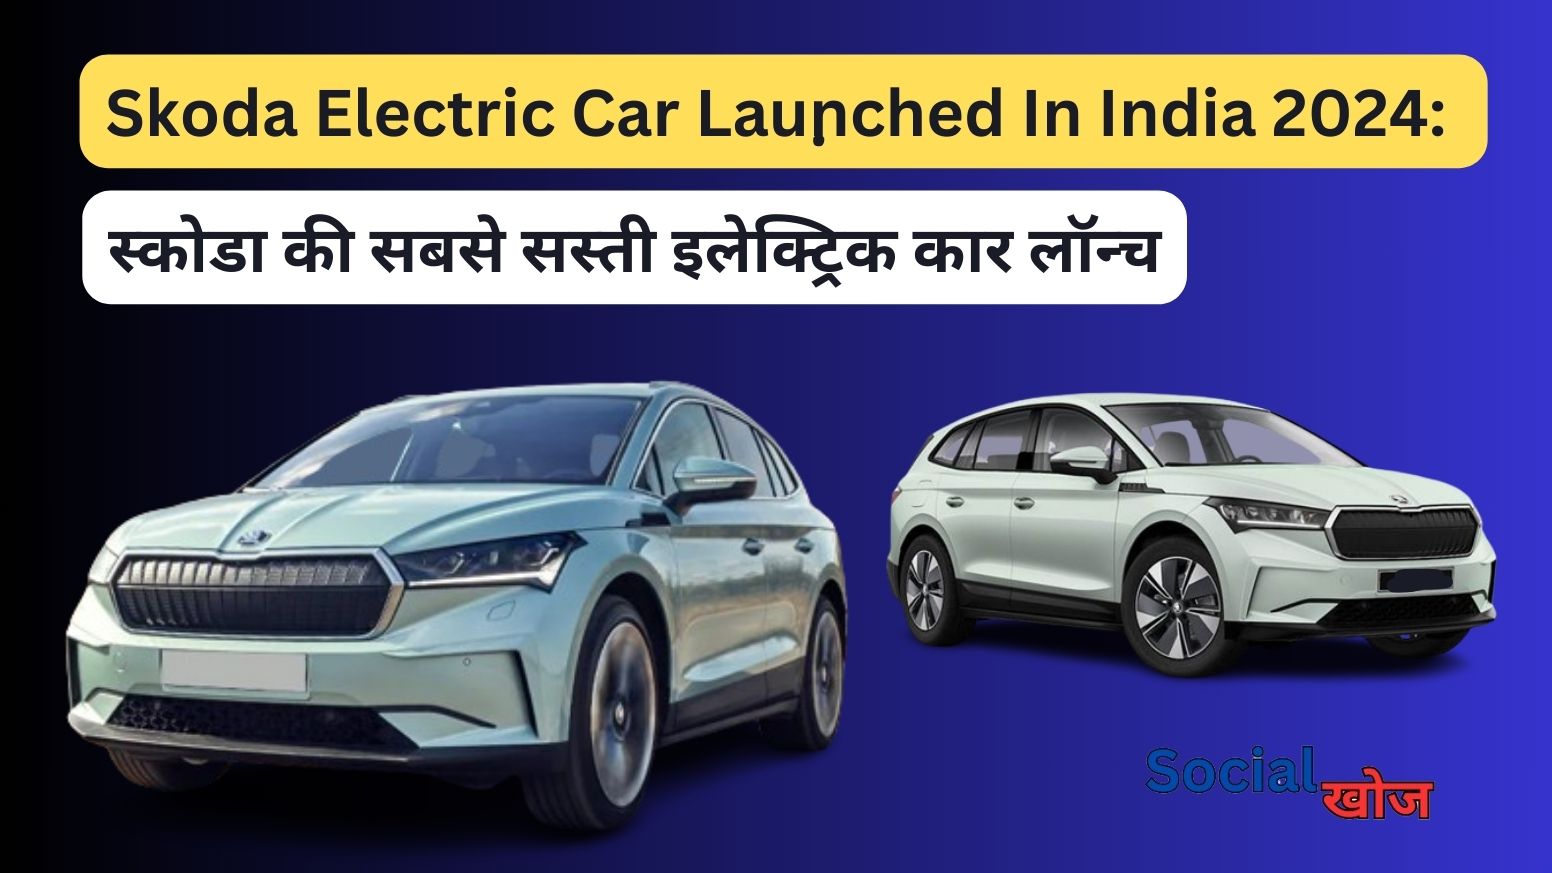 Skoda Electric Car Launched In India 2024: स्कोडा की सबसे सस्ती इलेक्ट्रिक कार लॉन्च